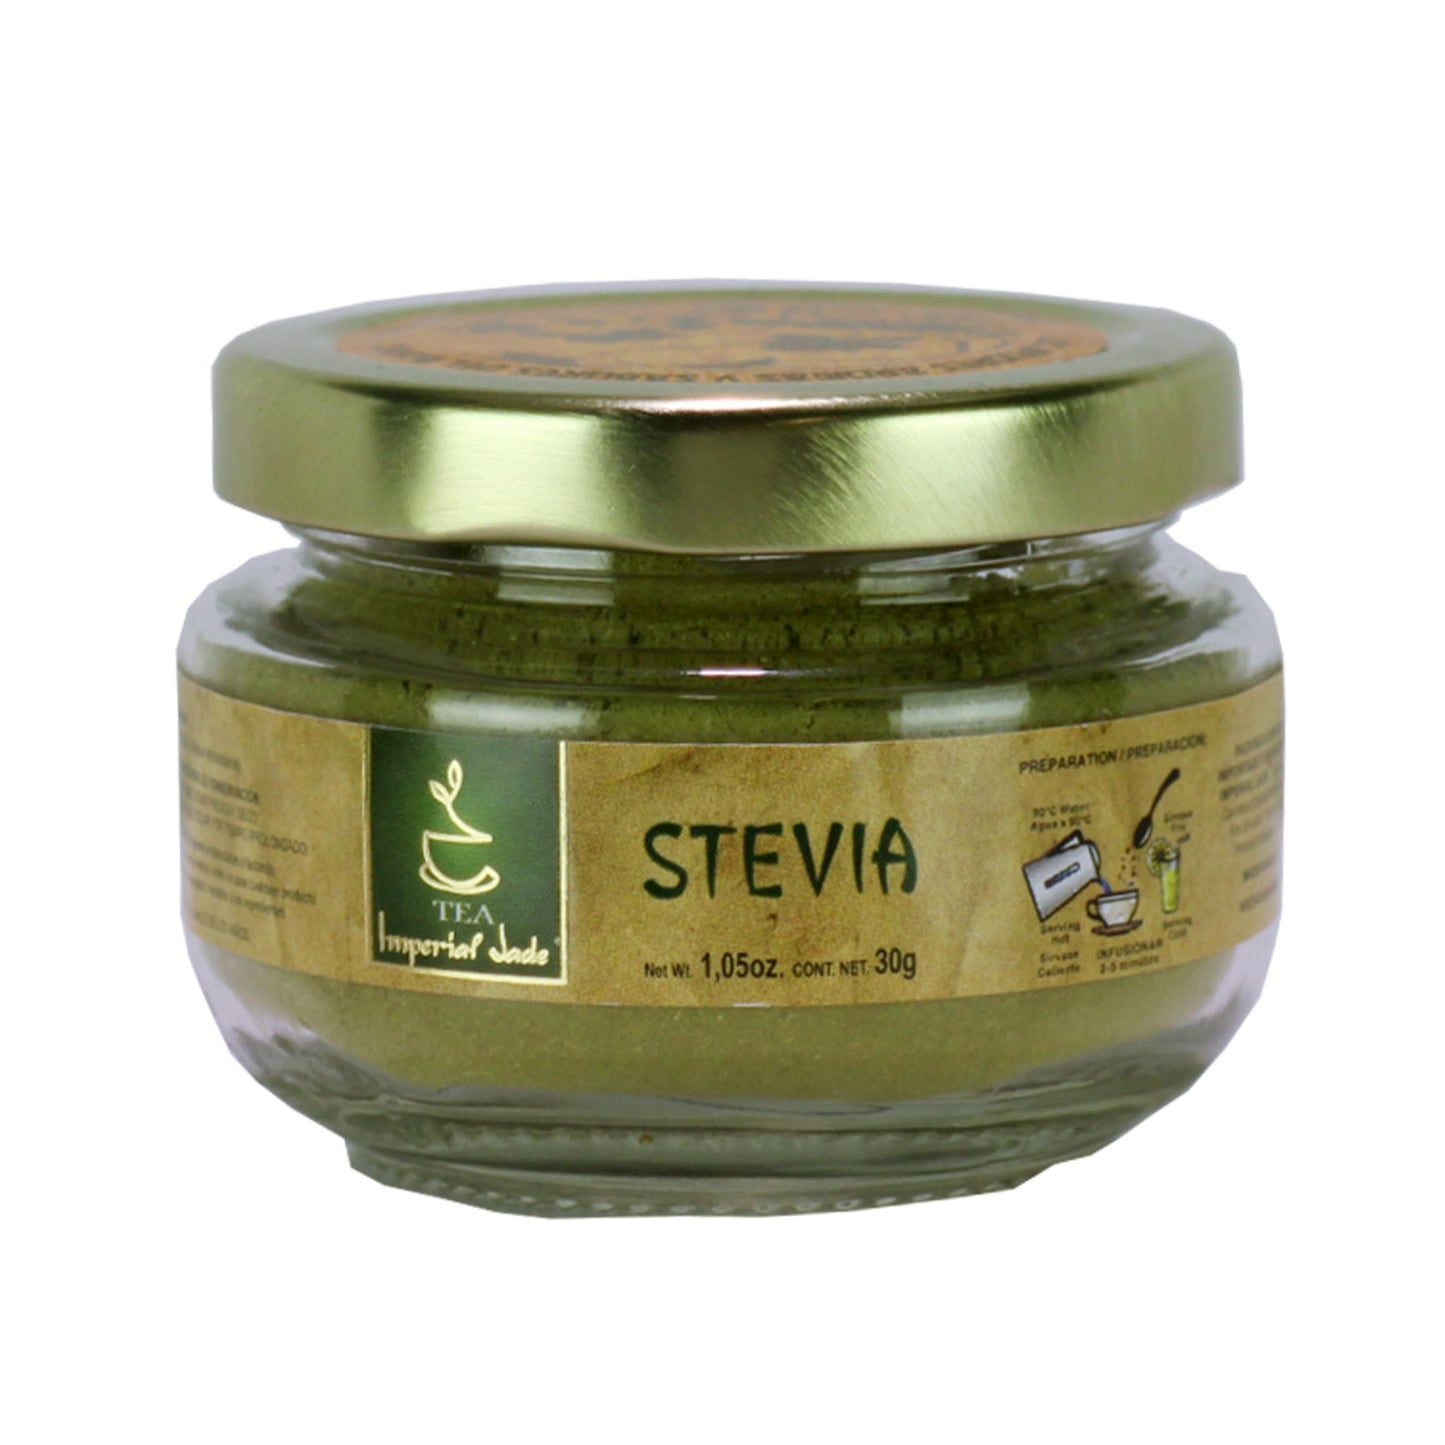 IMPERIAL JADE ® té stevia hojas frasco 30g